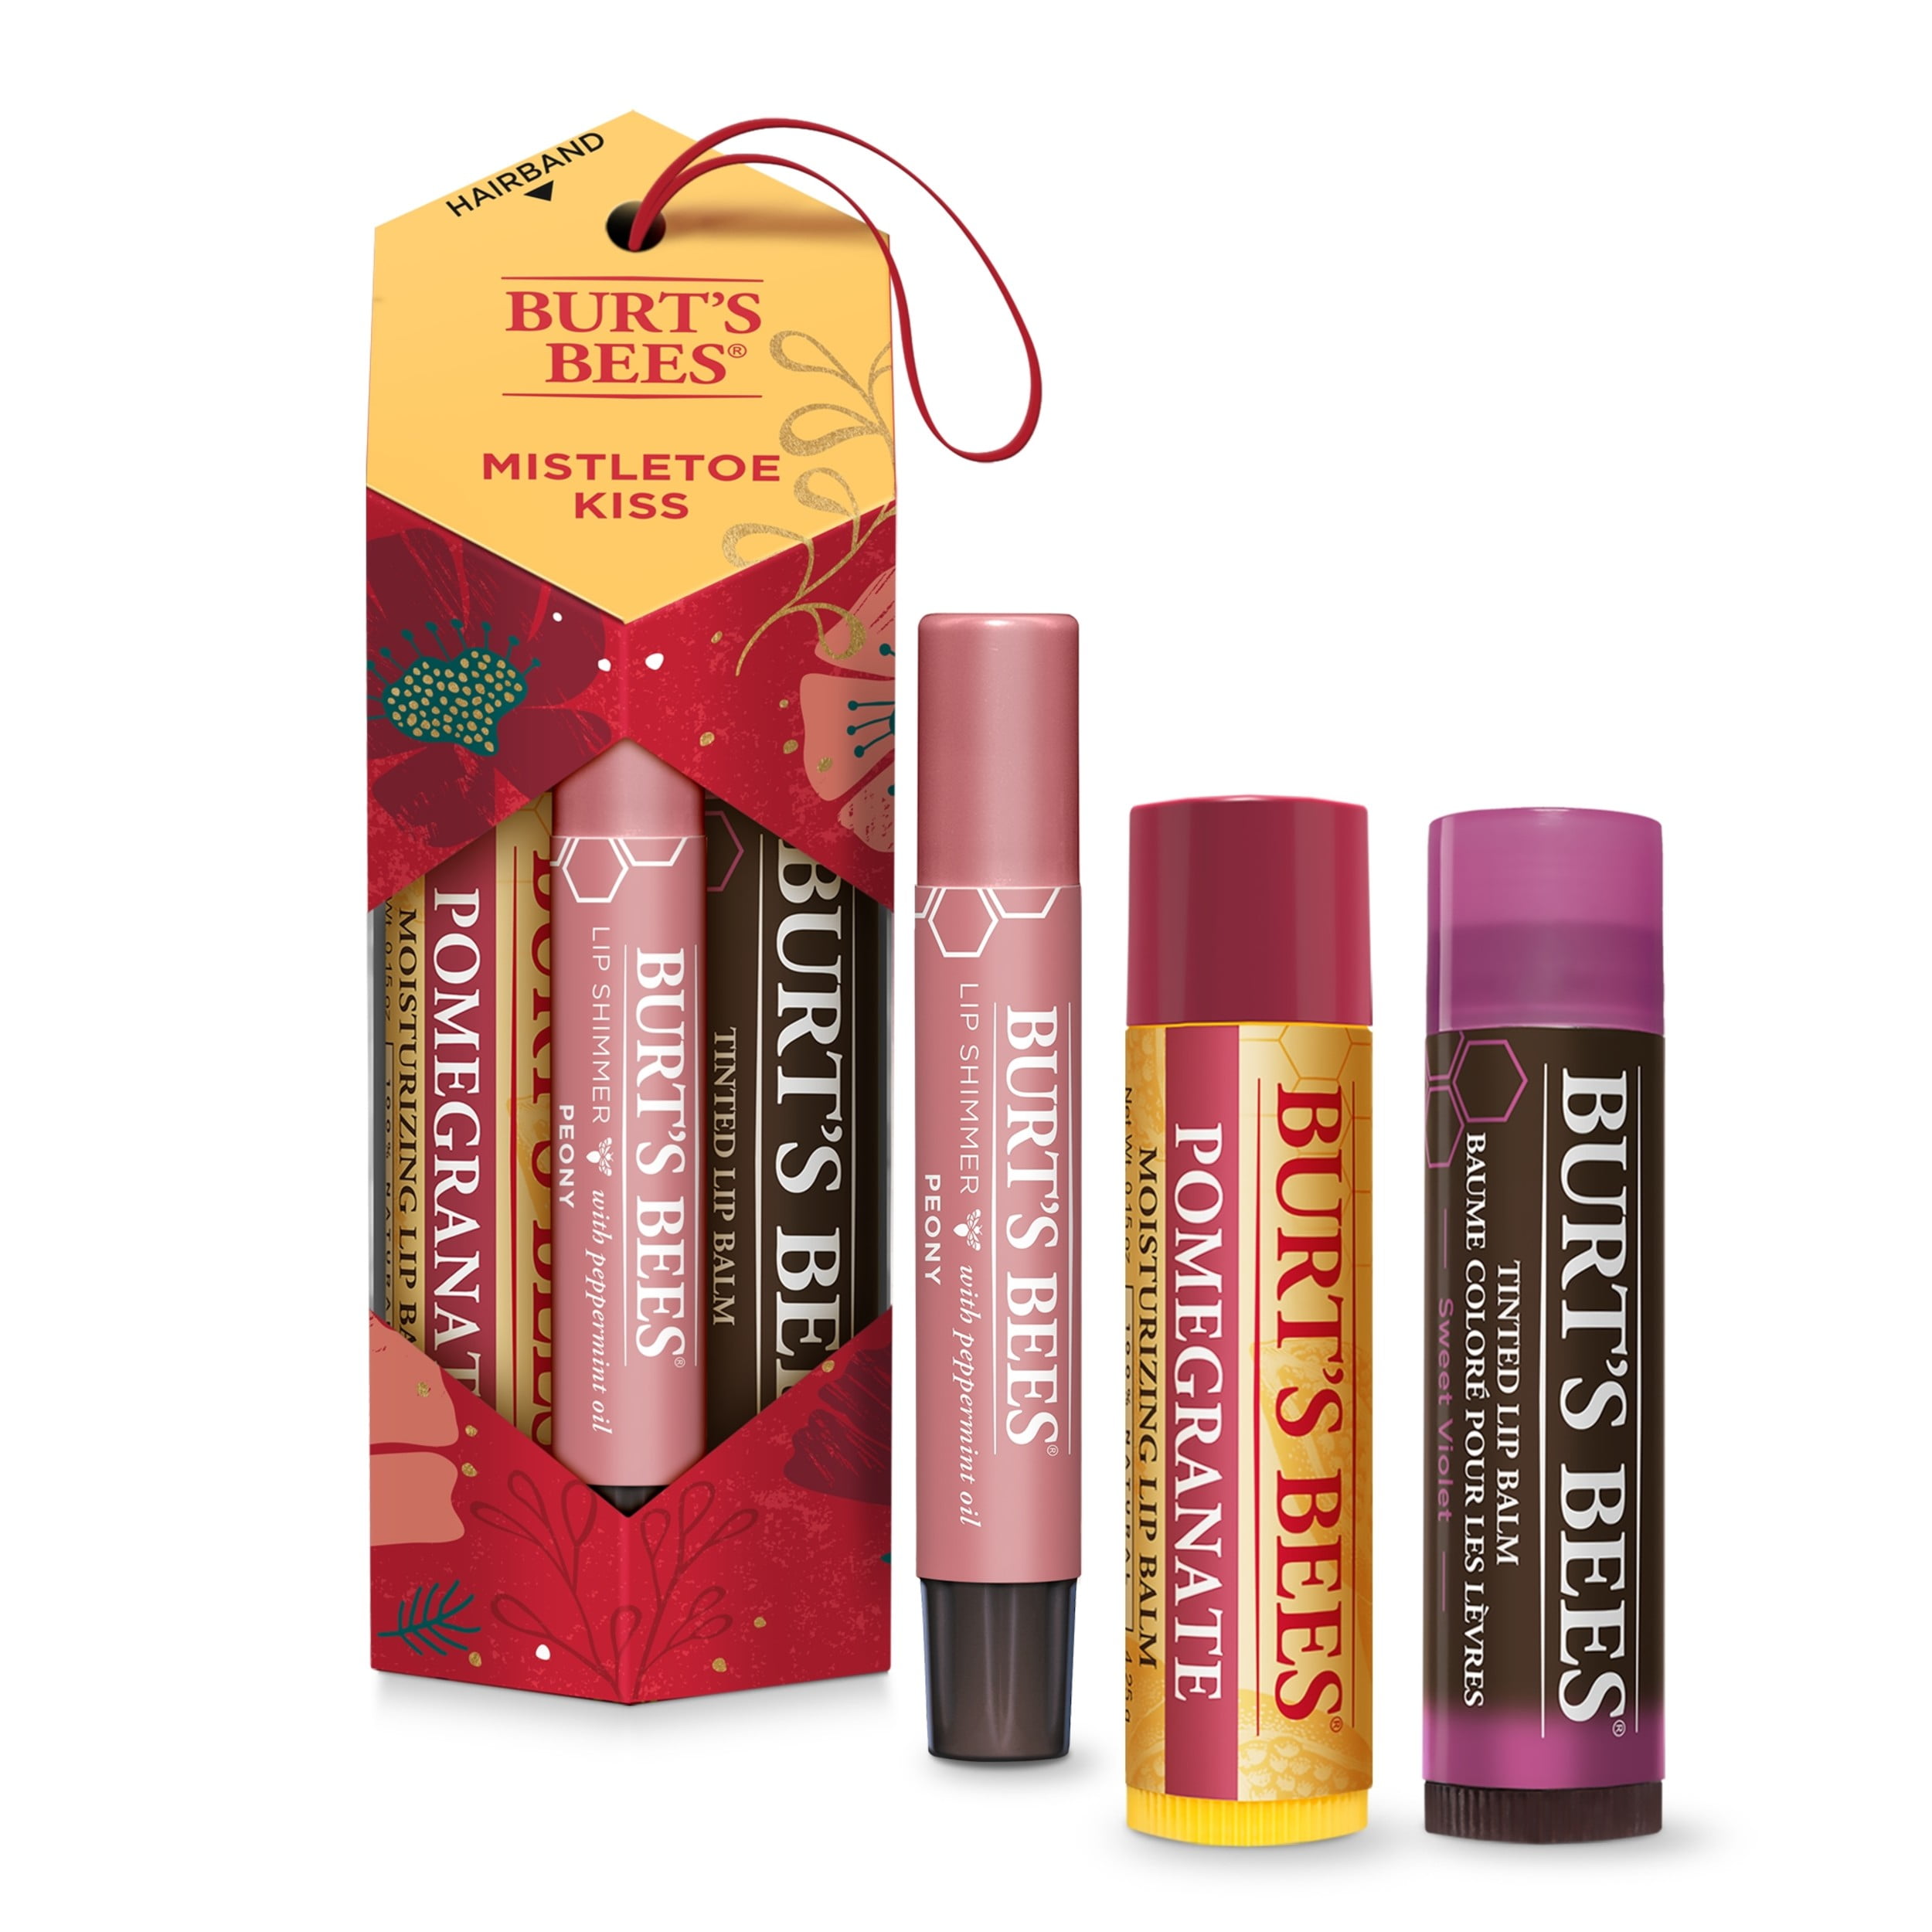 Wijzerplaat Op tijd replica Burt's Bees Mistletoe Kiss Holiday Gift Set, Lip Balm, Lip Shimmer and  Tinted Lip Balm - Walmart.com